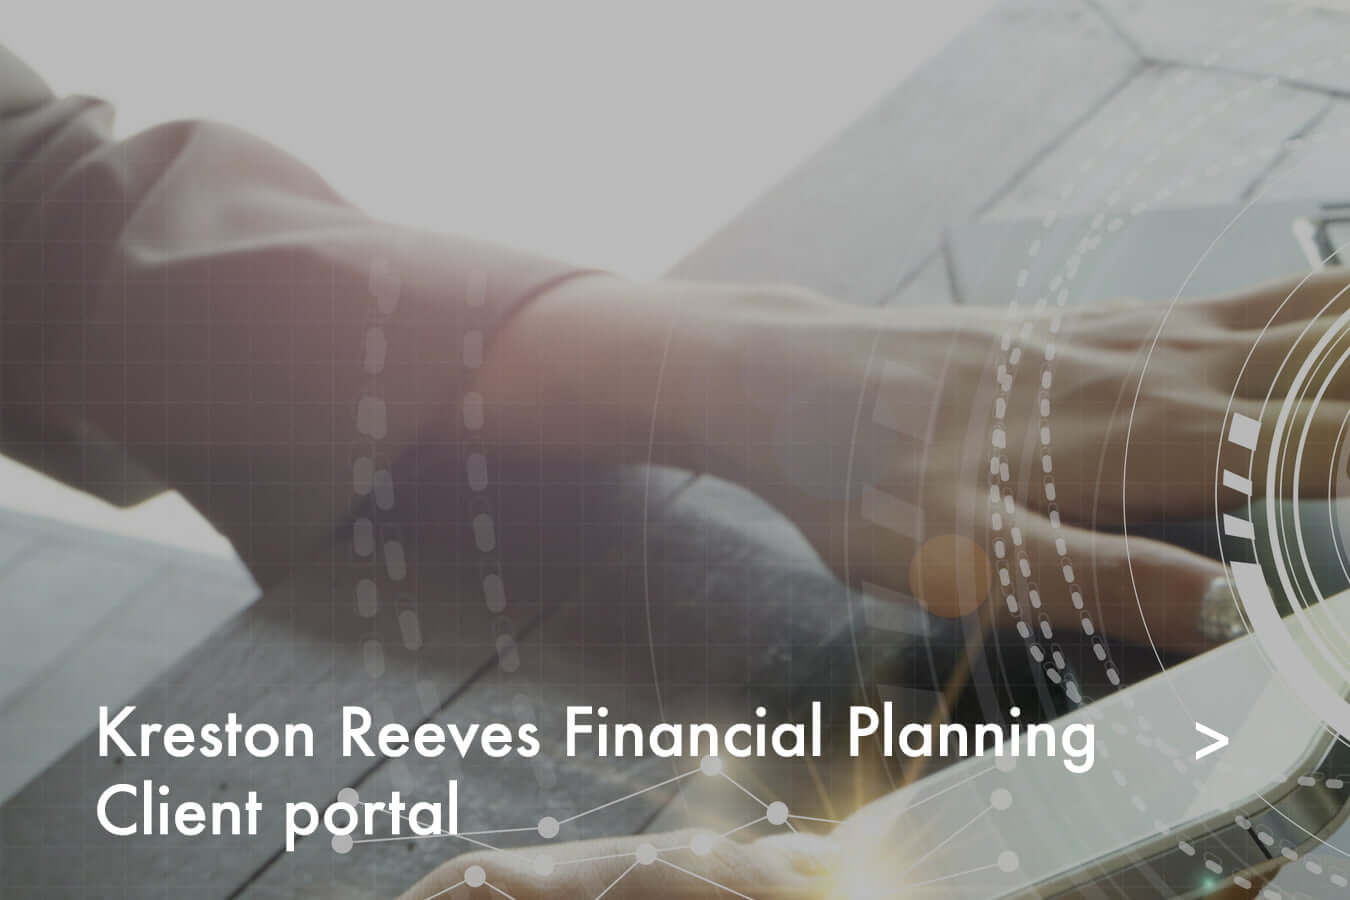 Kreston Reeves Financial Planning client portal link image